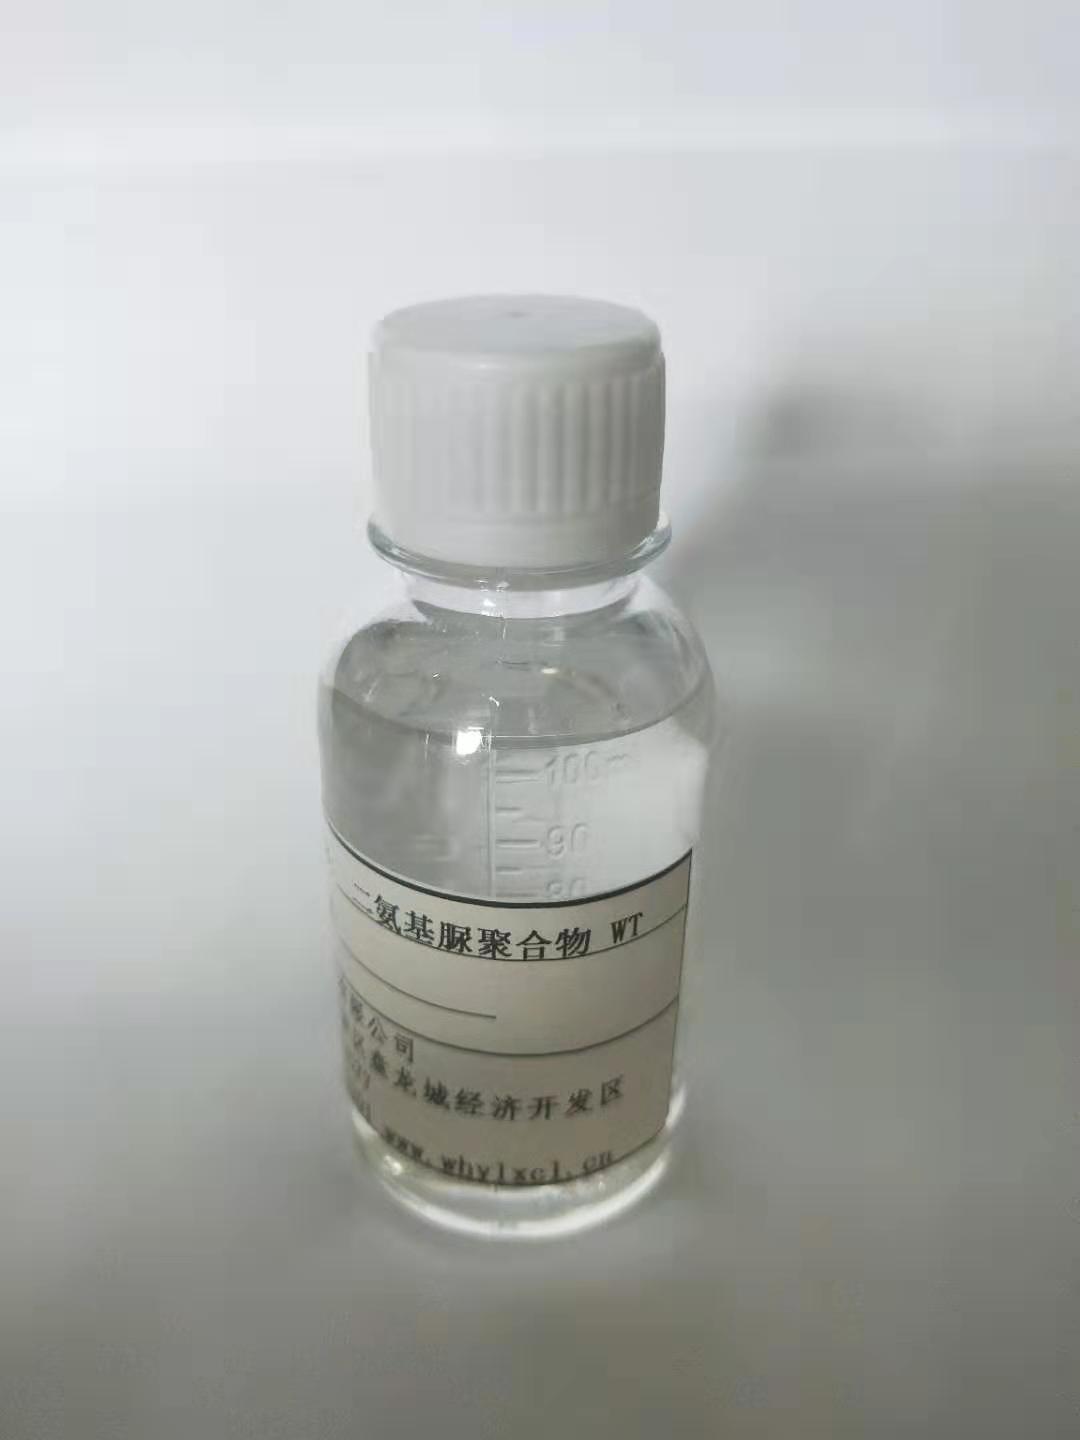 二氨基脲聚合物WT,Diaminoarea polymer